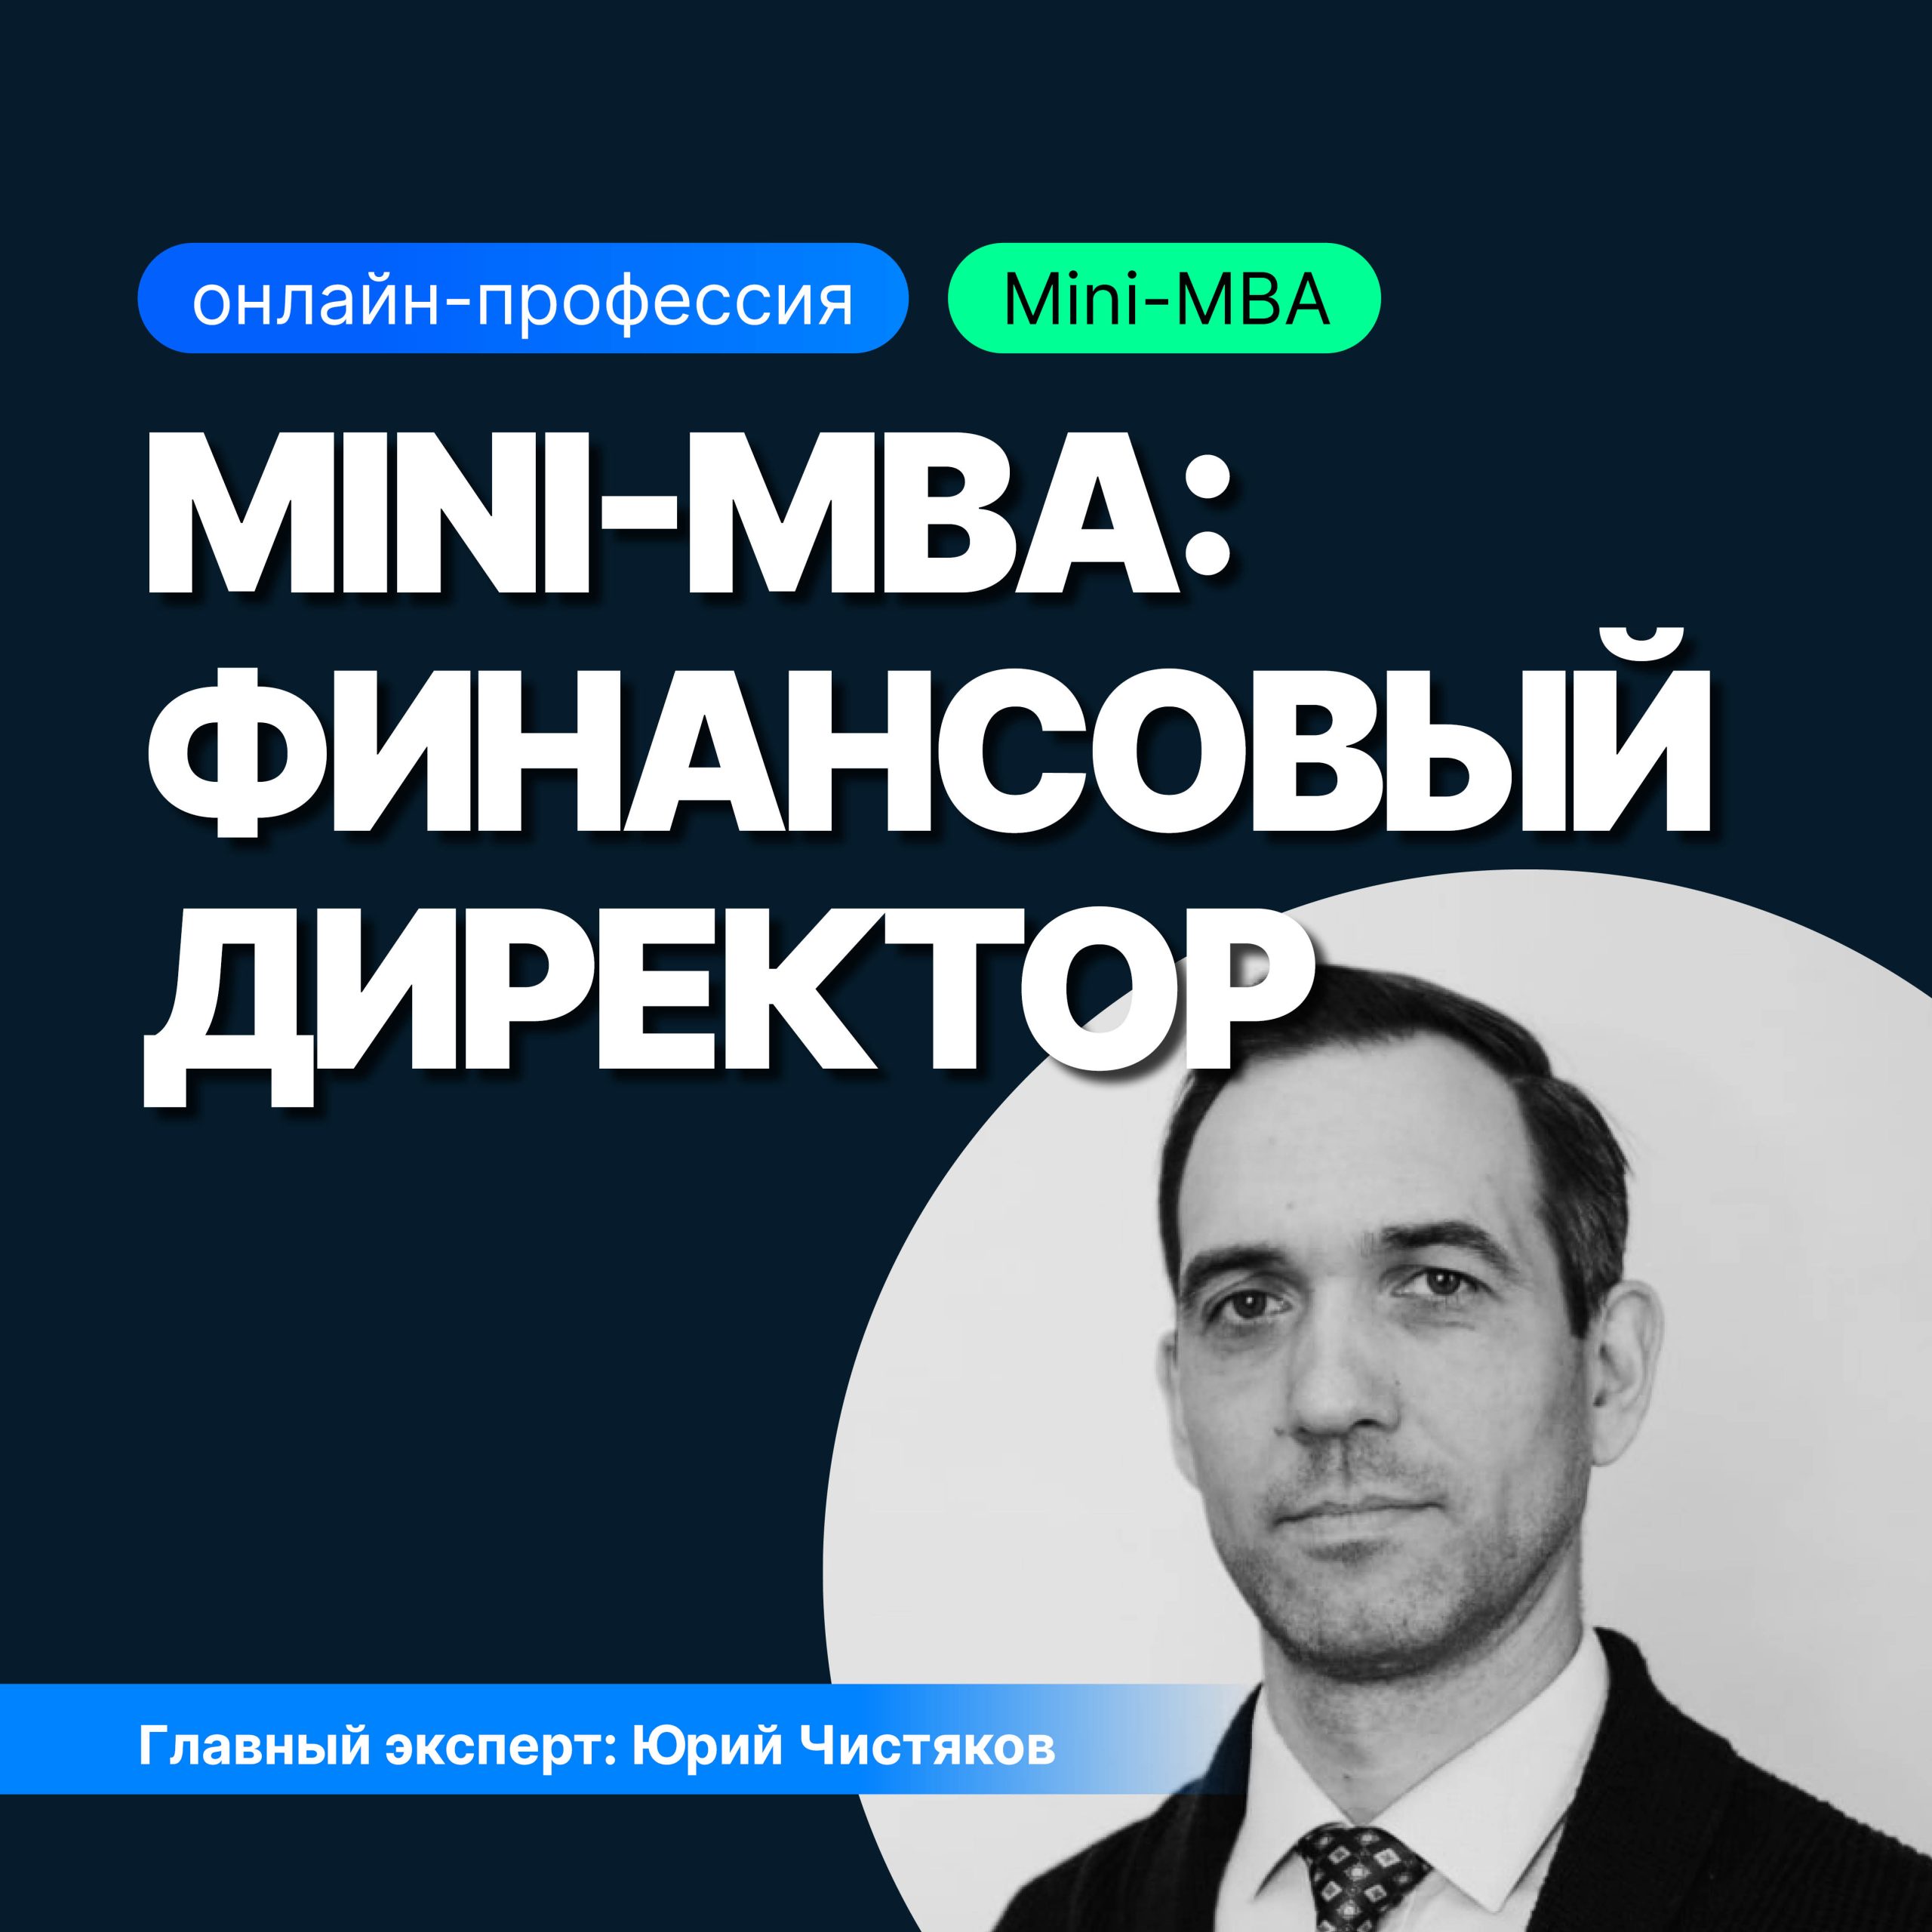 Mini-MBA: Финансовый директор